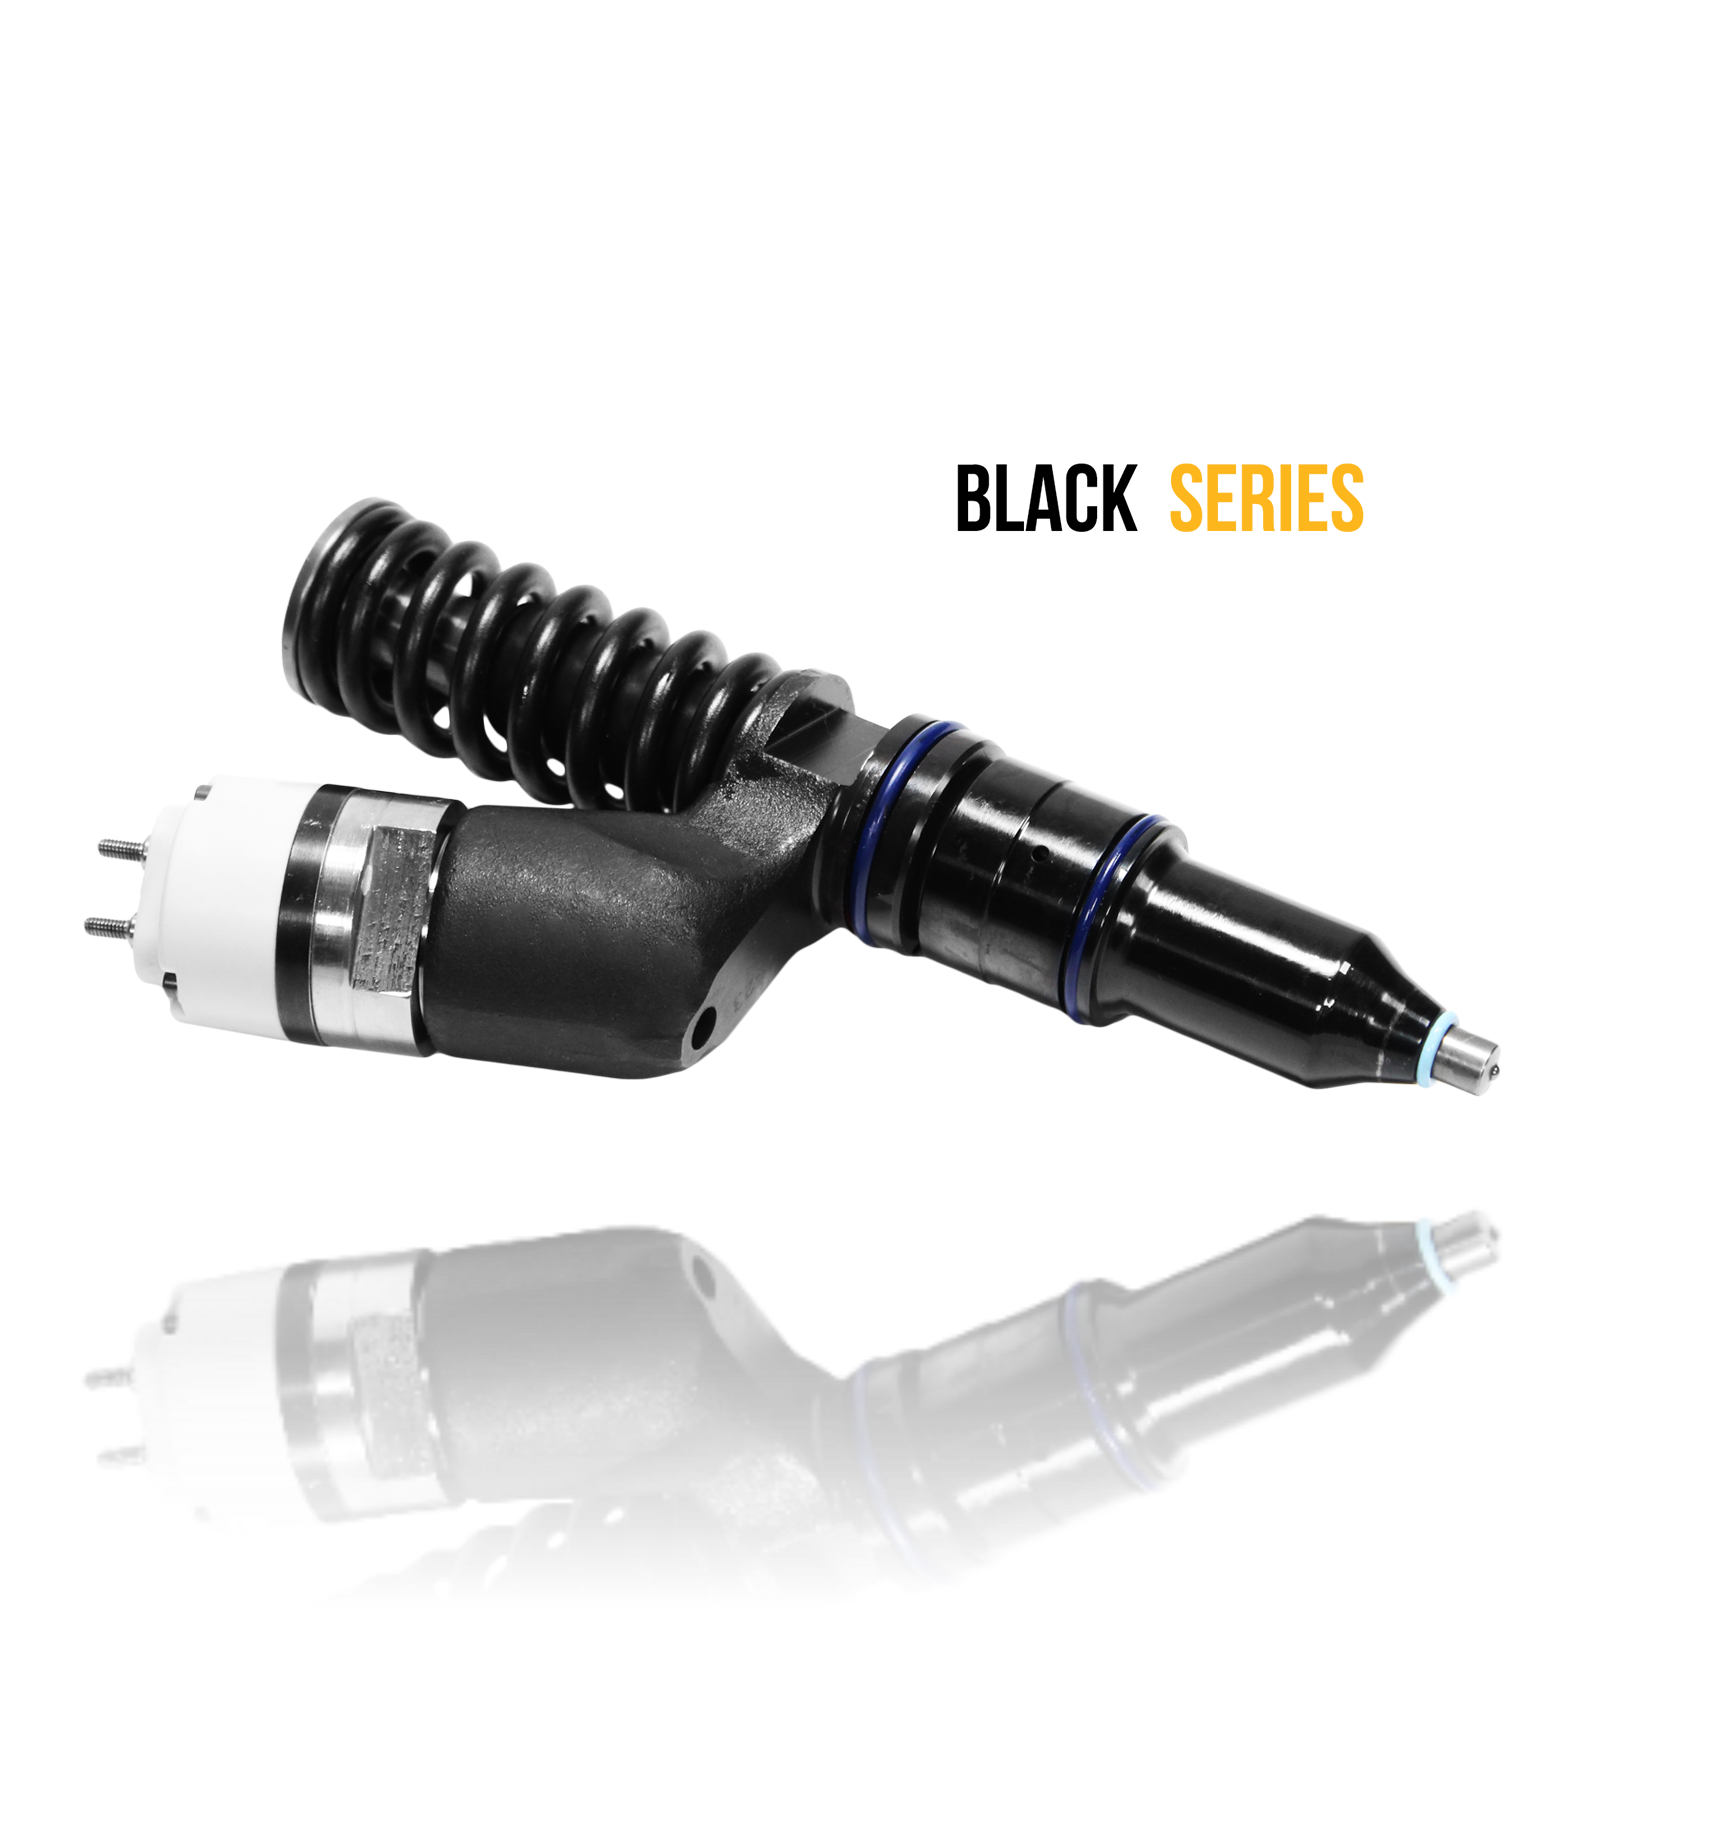 Black Series Injector Image P268159R